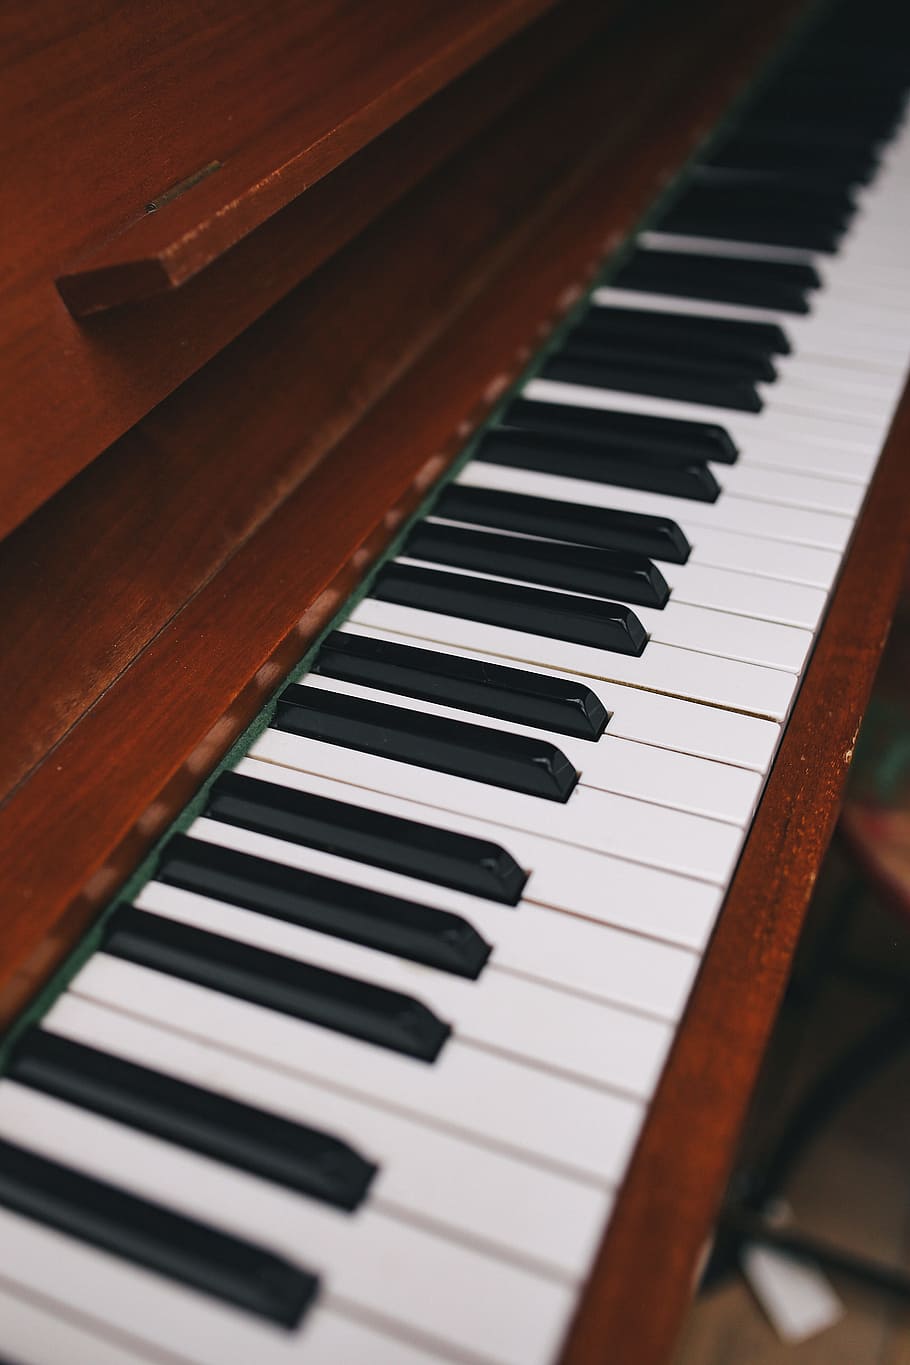 o teclado do piano, teclado, arte, piano, música, melodia, musical, instrumento musical, equipamento musical, tecla de piano